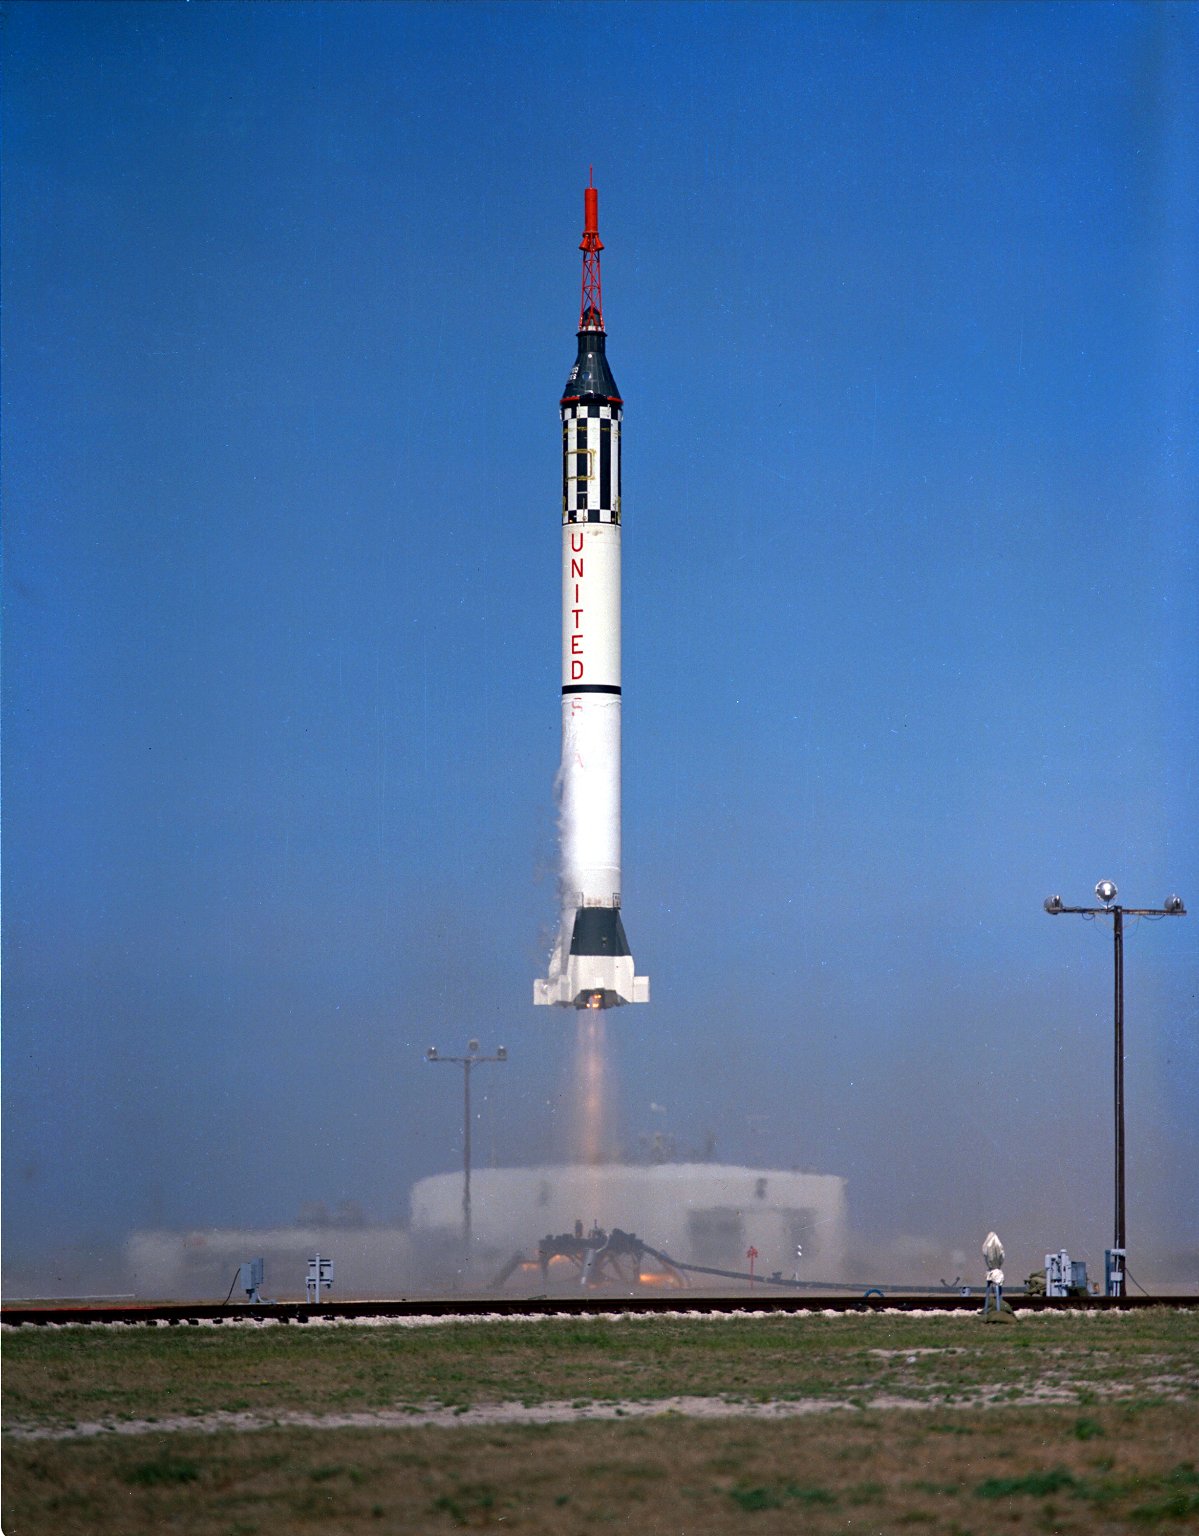 Mercury MR-2 rocket launch